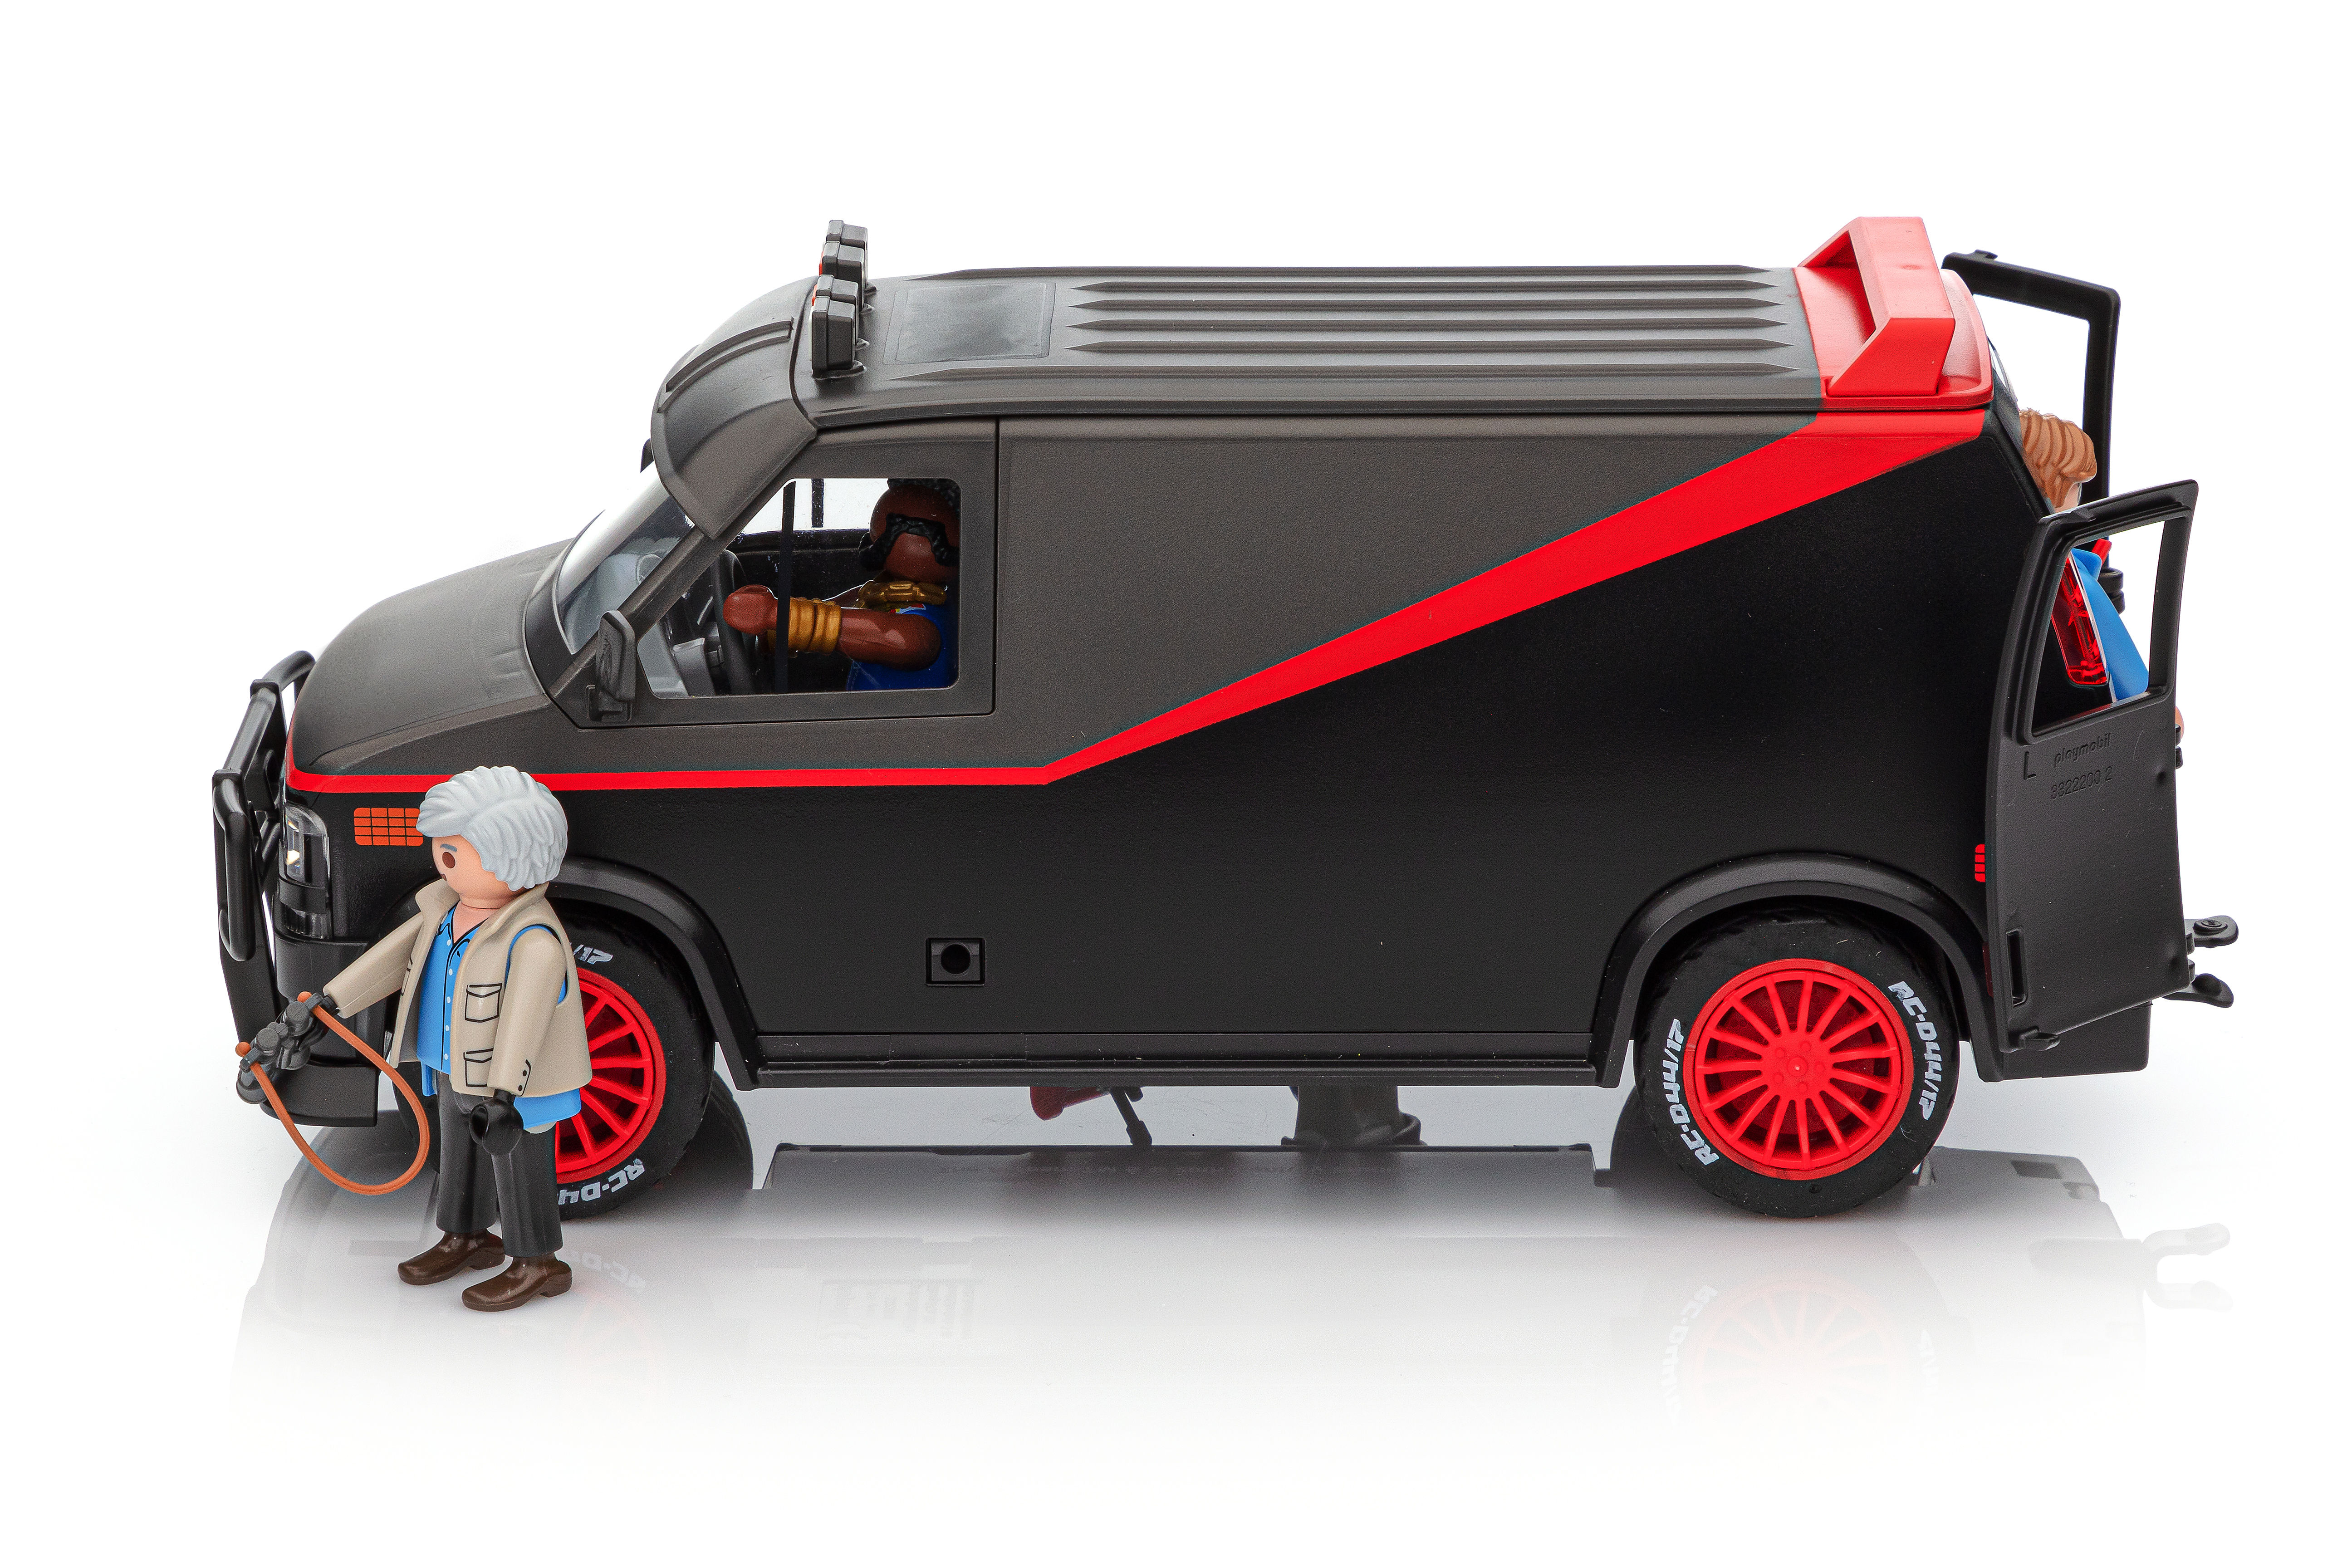 Playmobil The A-Team Van 70750